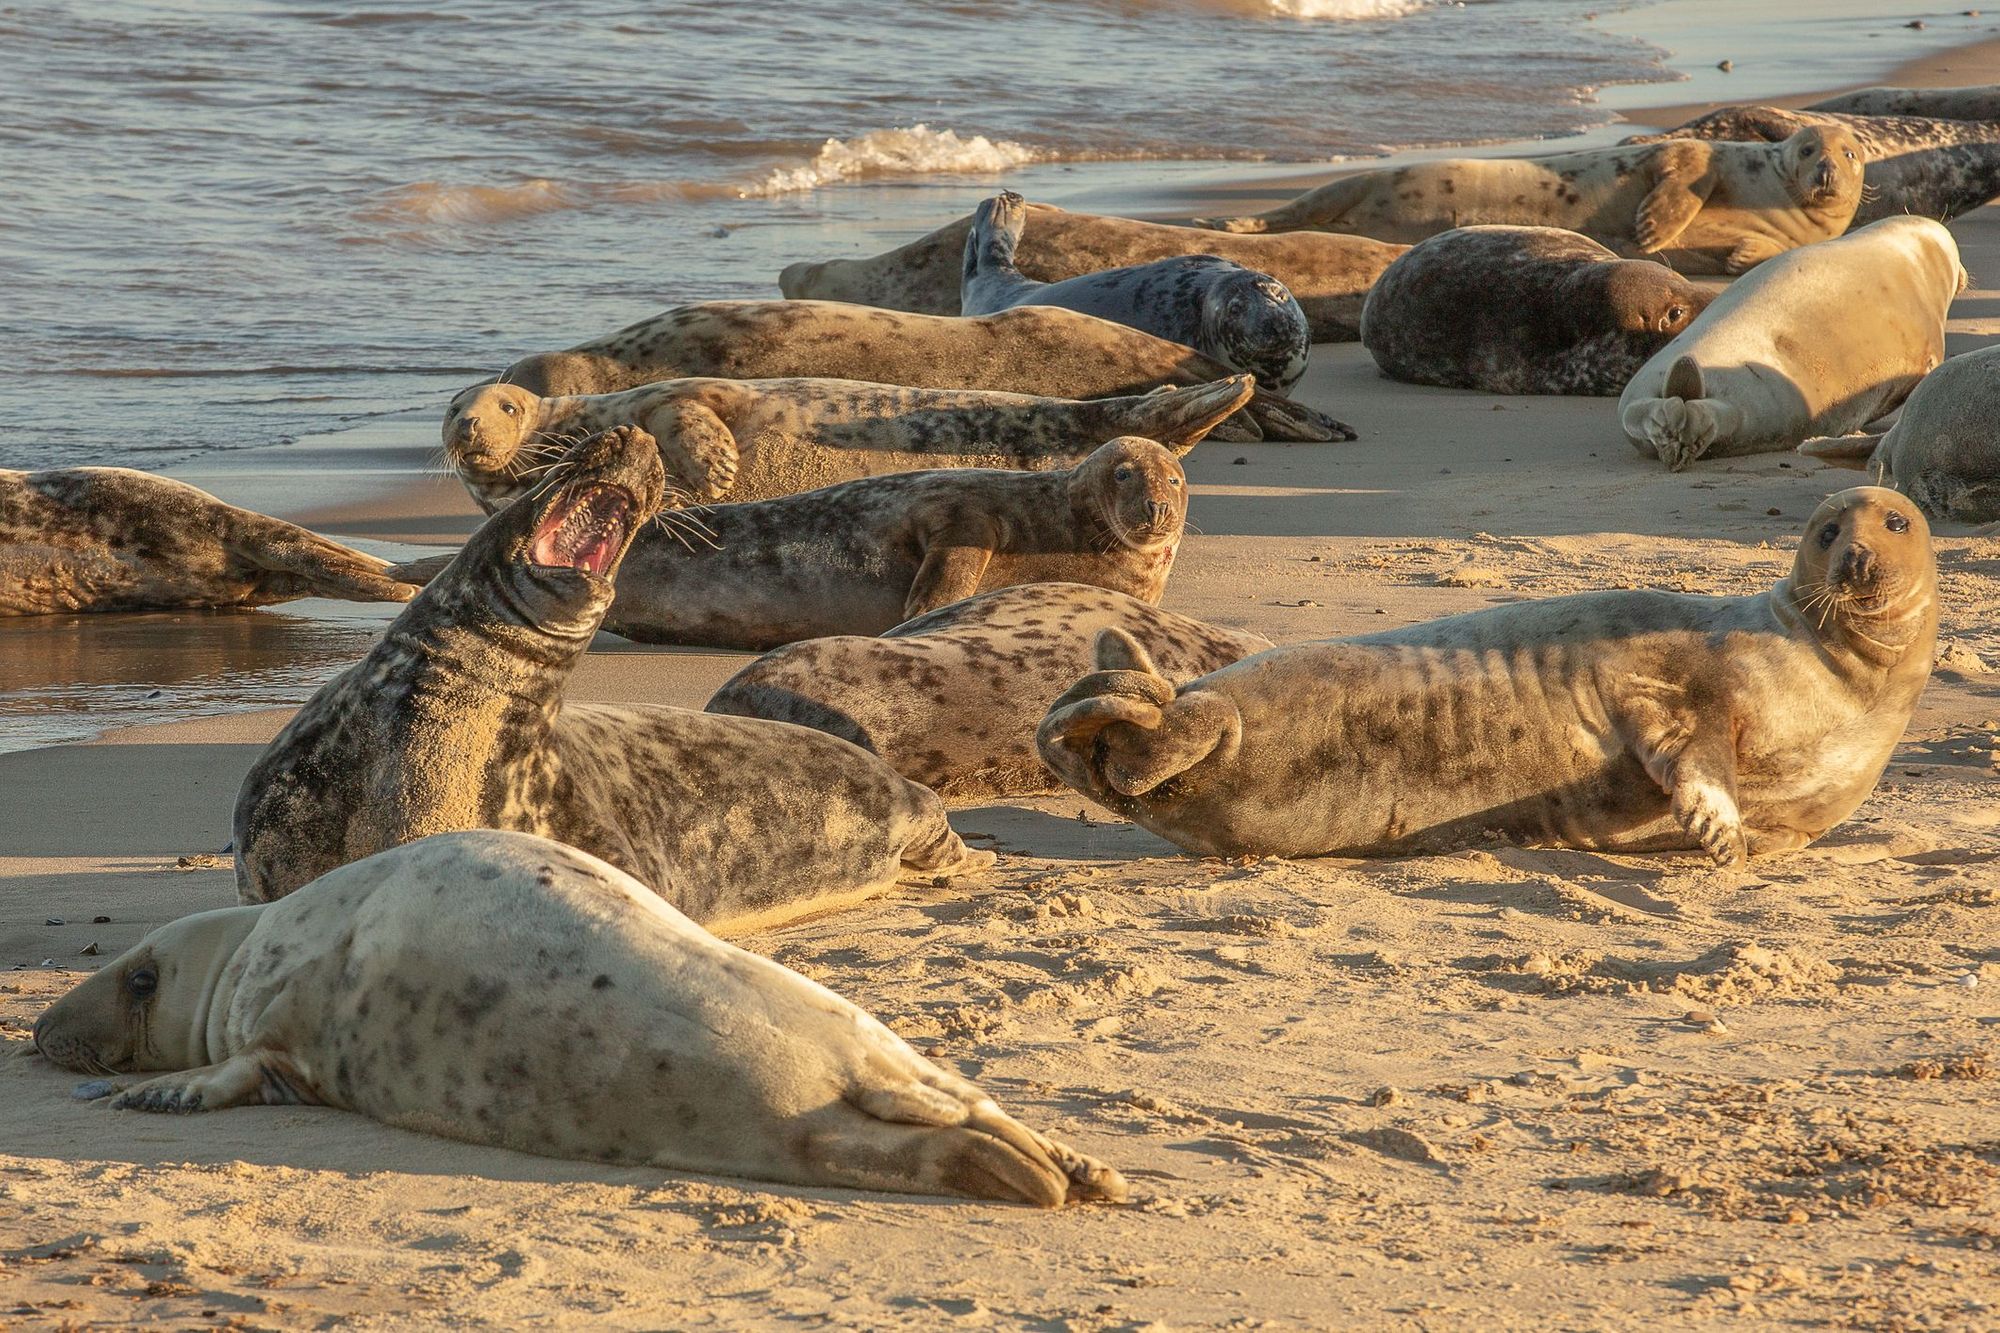 Seals at Horsey Beach